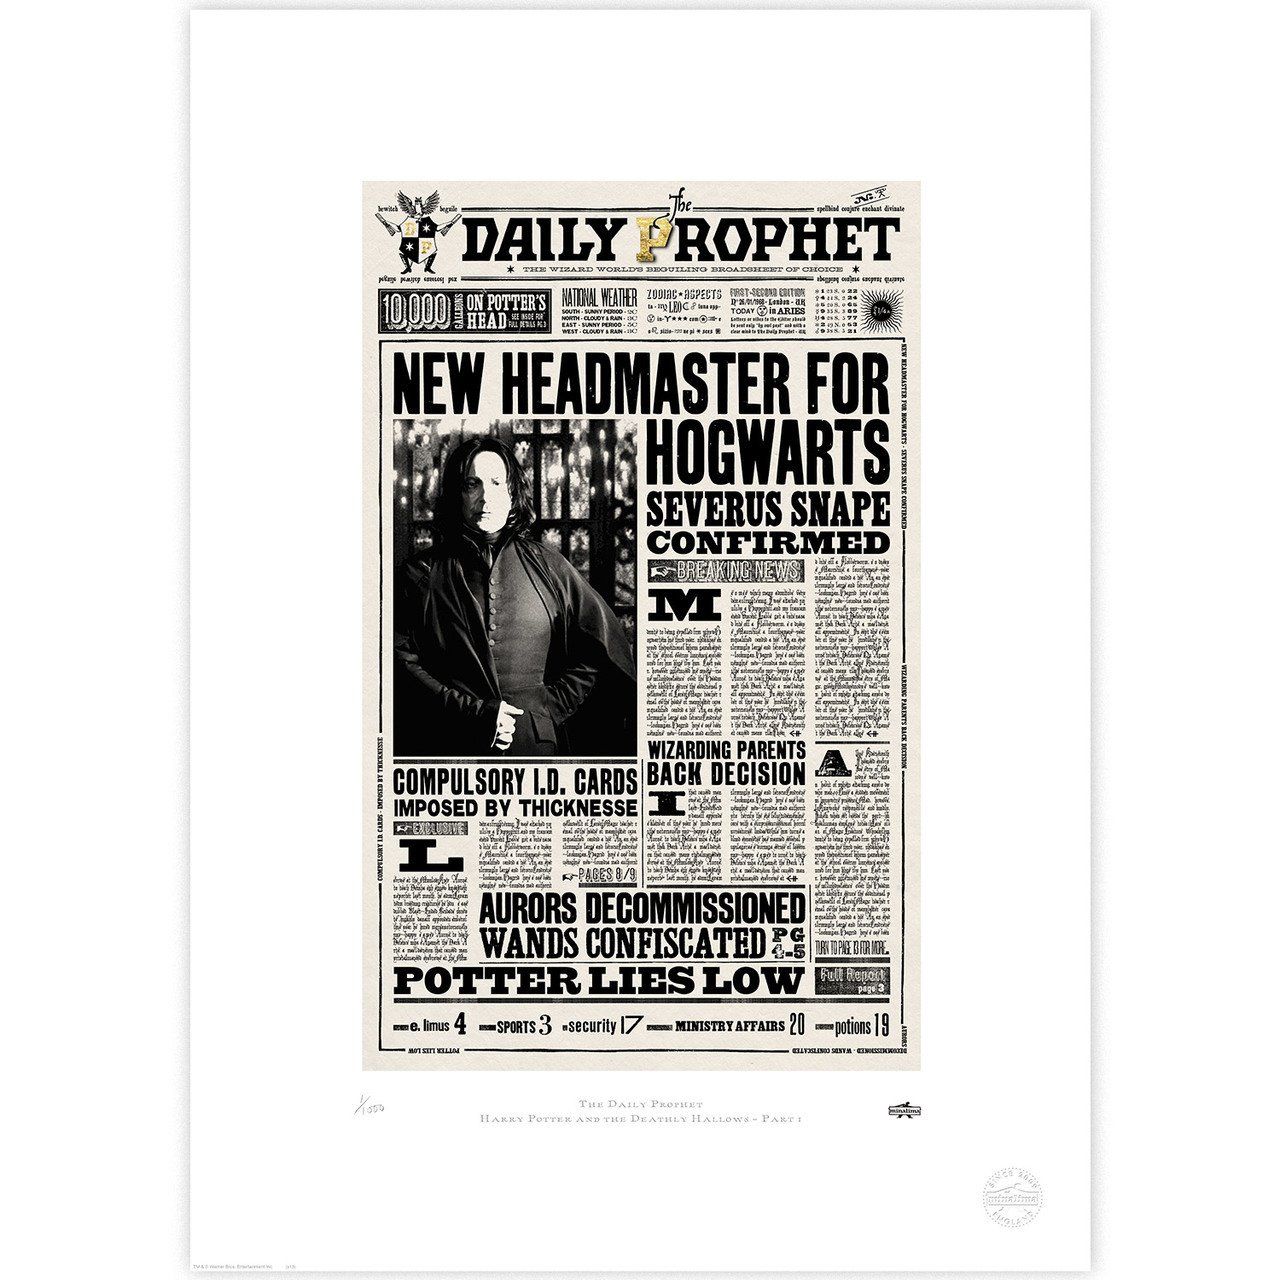 The Daily Prophet Headmaster for Hogwarts